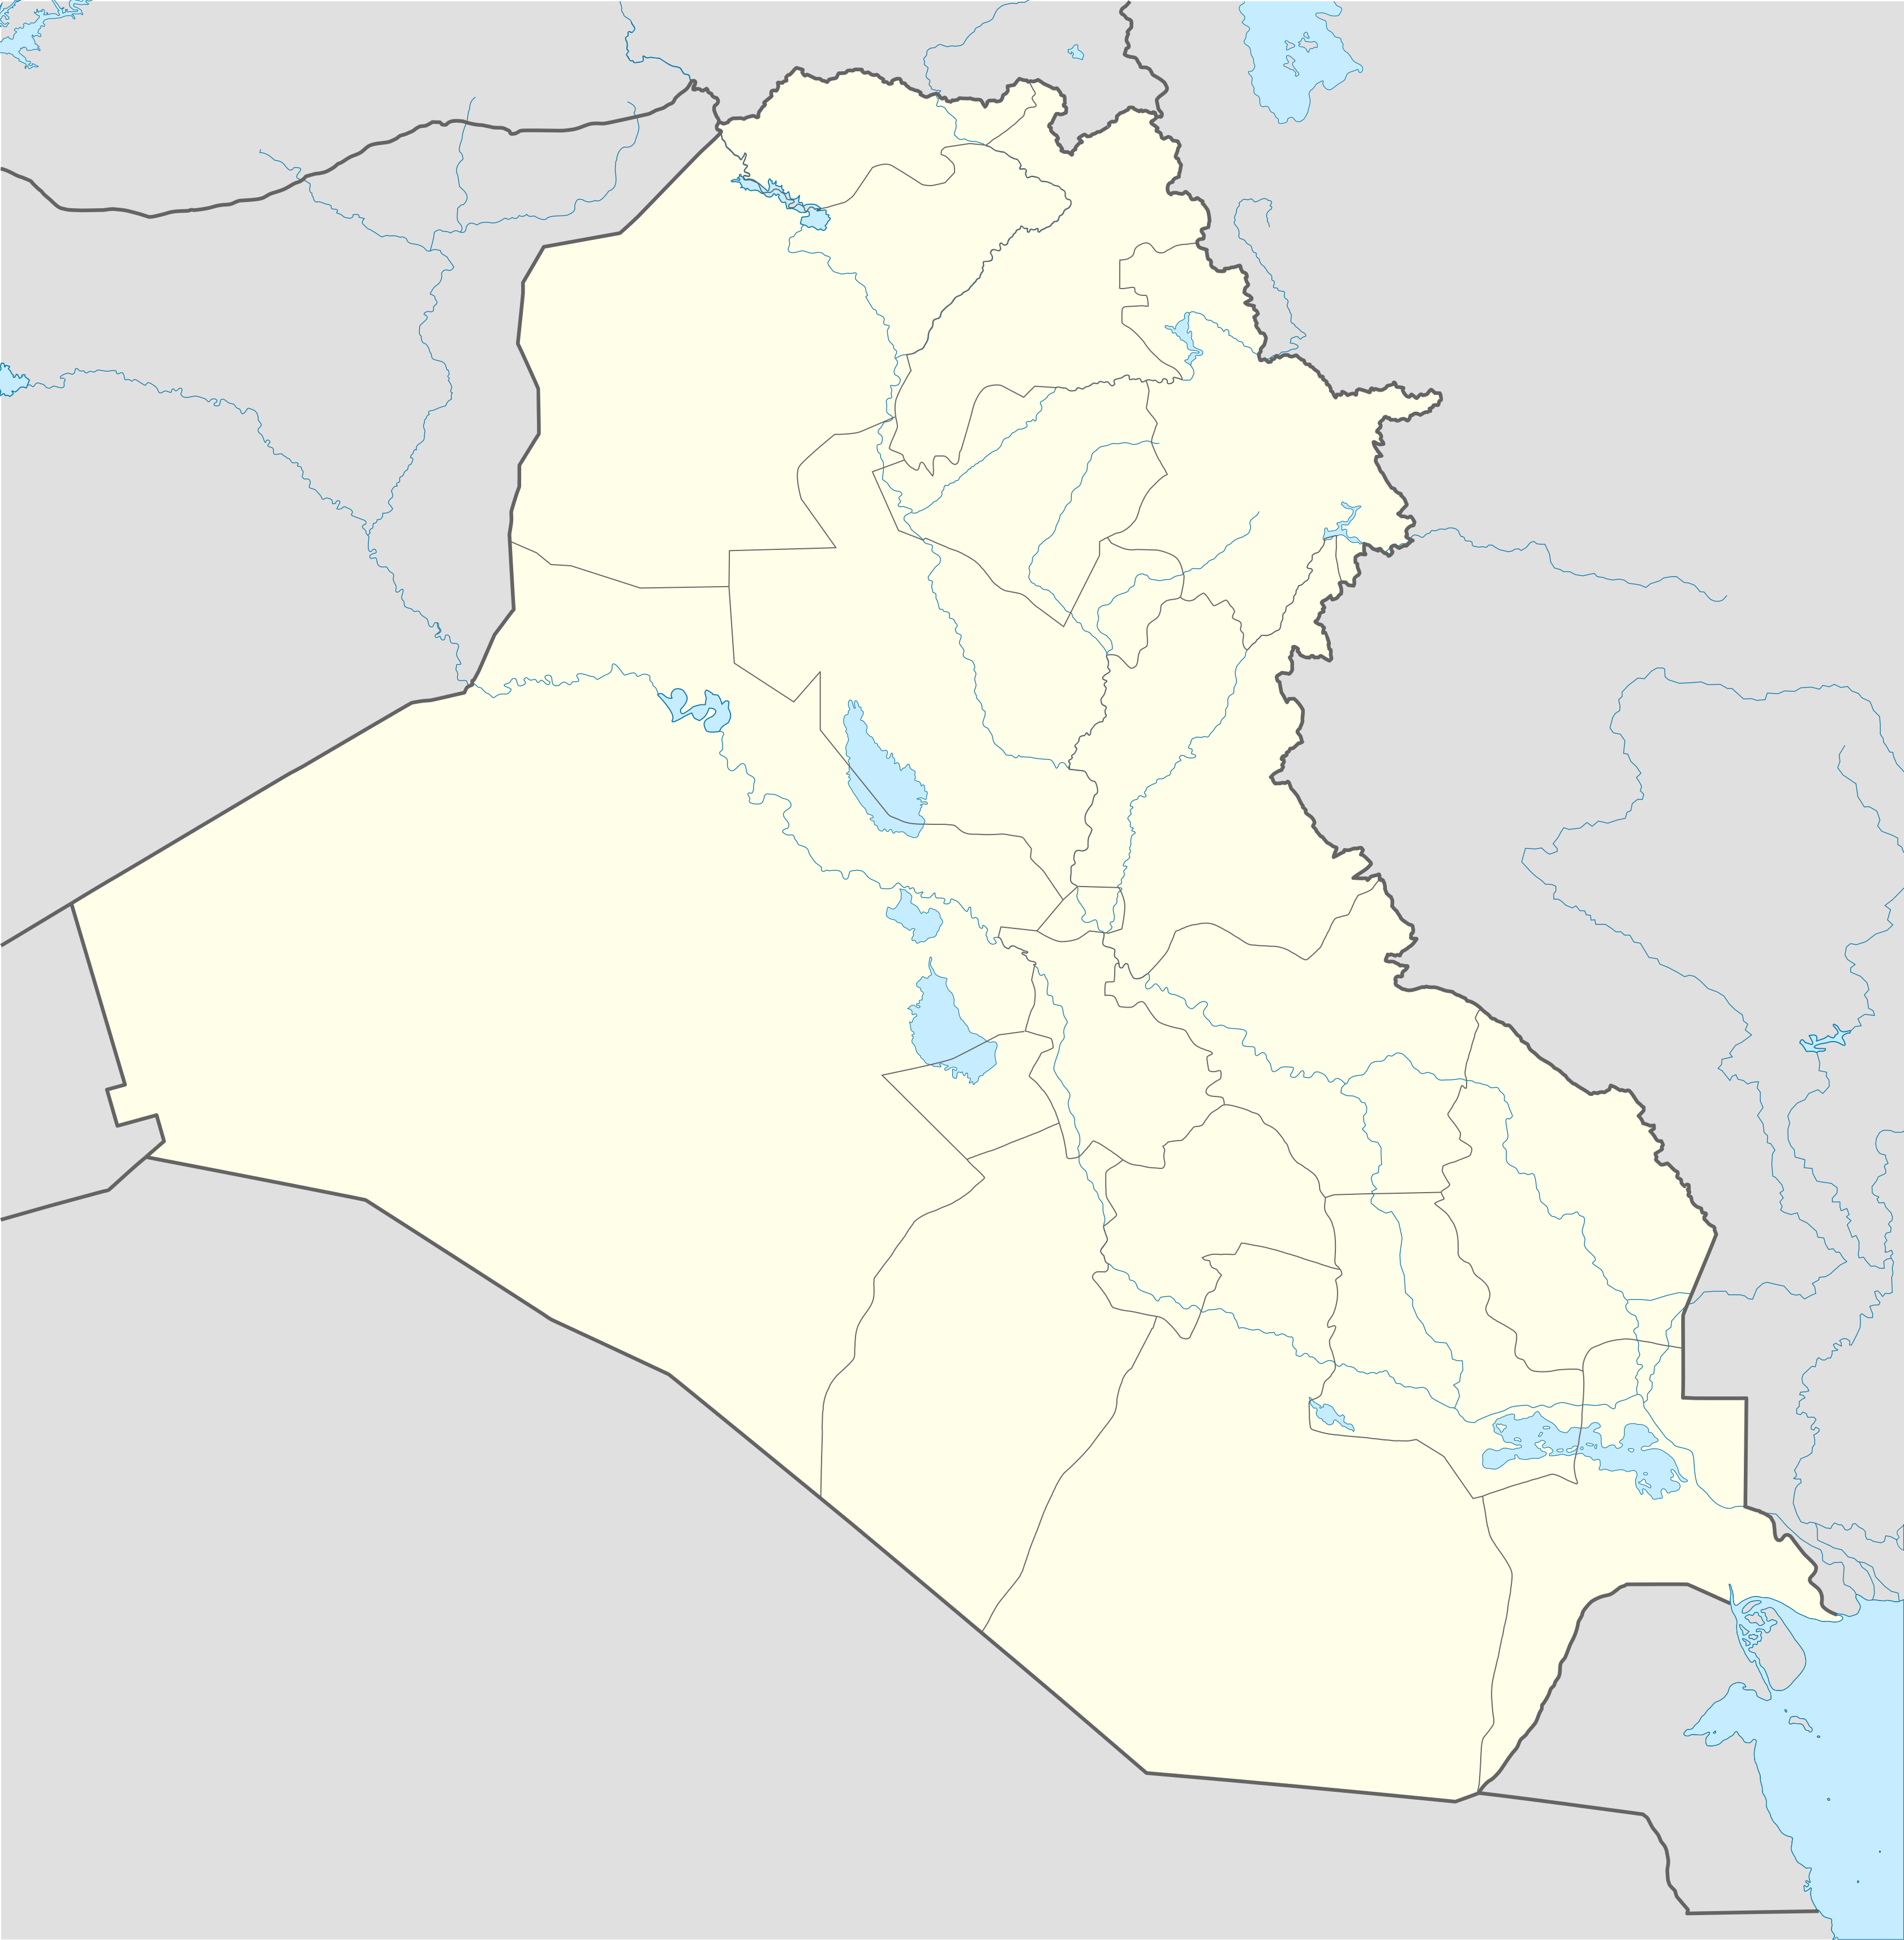 Spesh531/sandbox/Template:Iraqi insurgency detailed map is located in Iraq